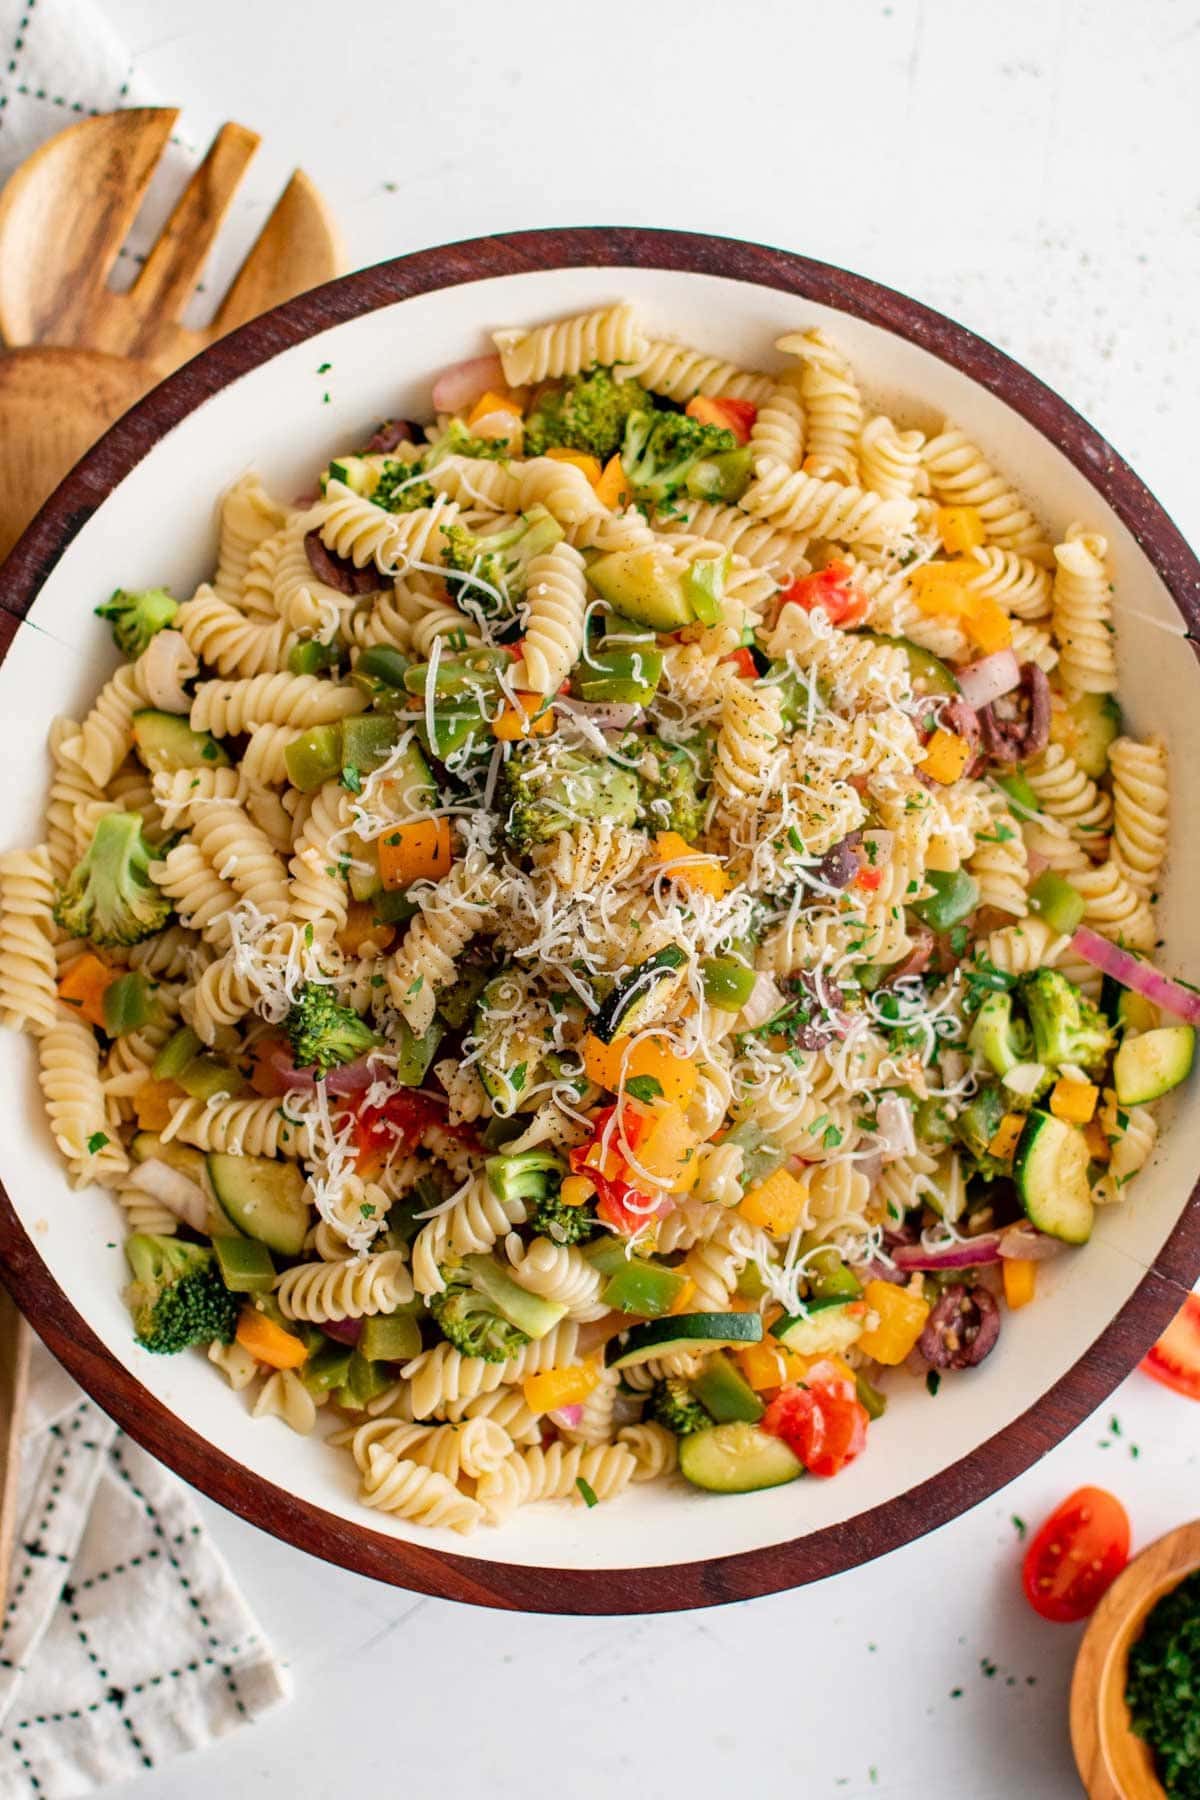 https://www.yellowblissroad.com/wp-content/uploads/2019/01/Vegetable-Pasta-Salad-5.jpg